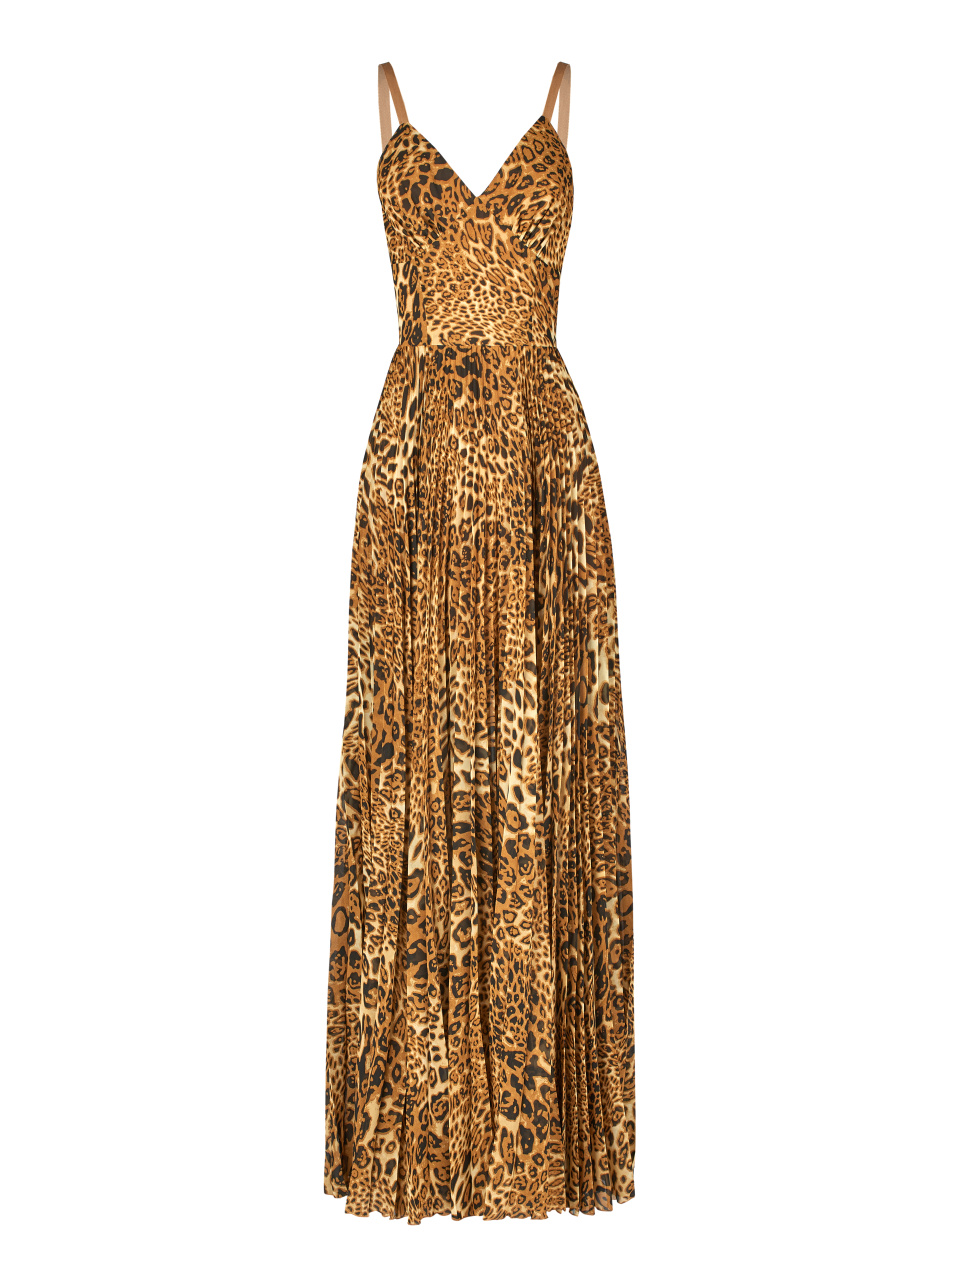 Леопардовое платье-макси из шифона, 1